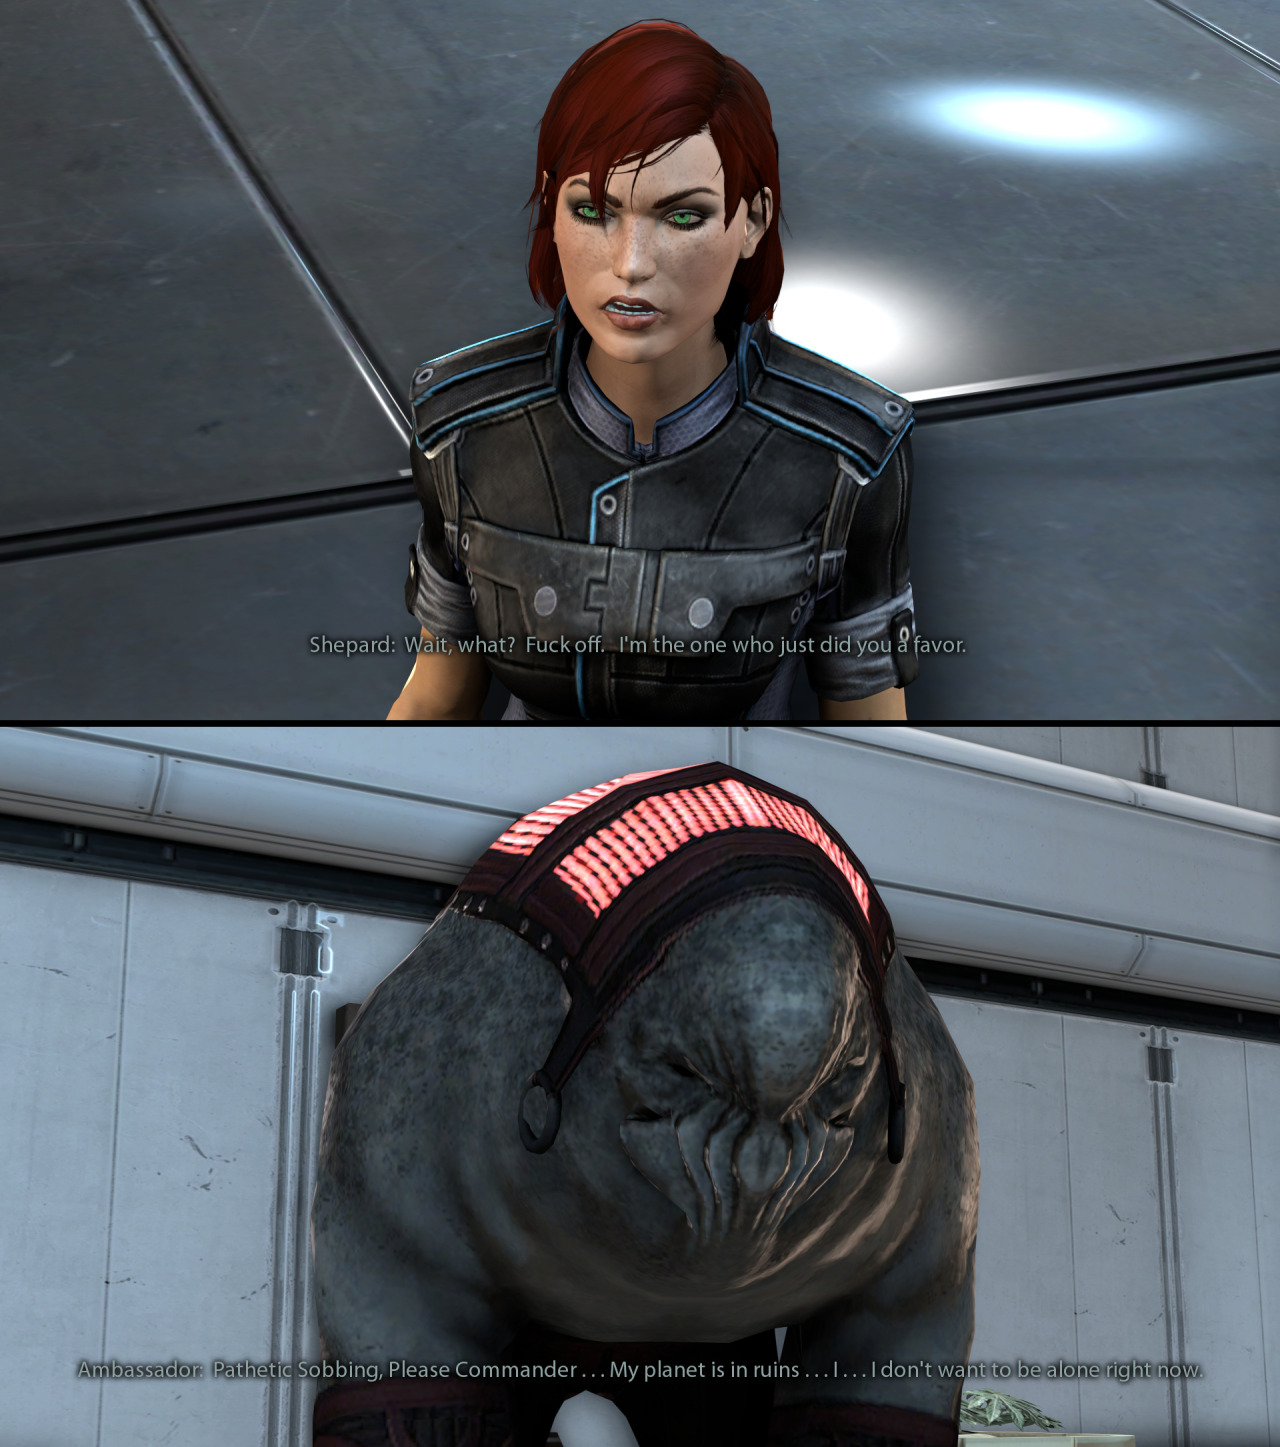 Mass Effect 3: Extortion Chapter 5: The Citadel Embassies1920 x 1080 renders: http://www.mediafire.com/download/yugir1bojy7i2rd/Extortion